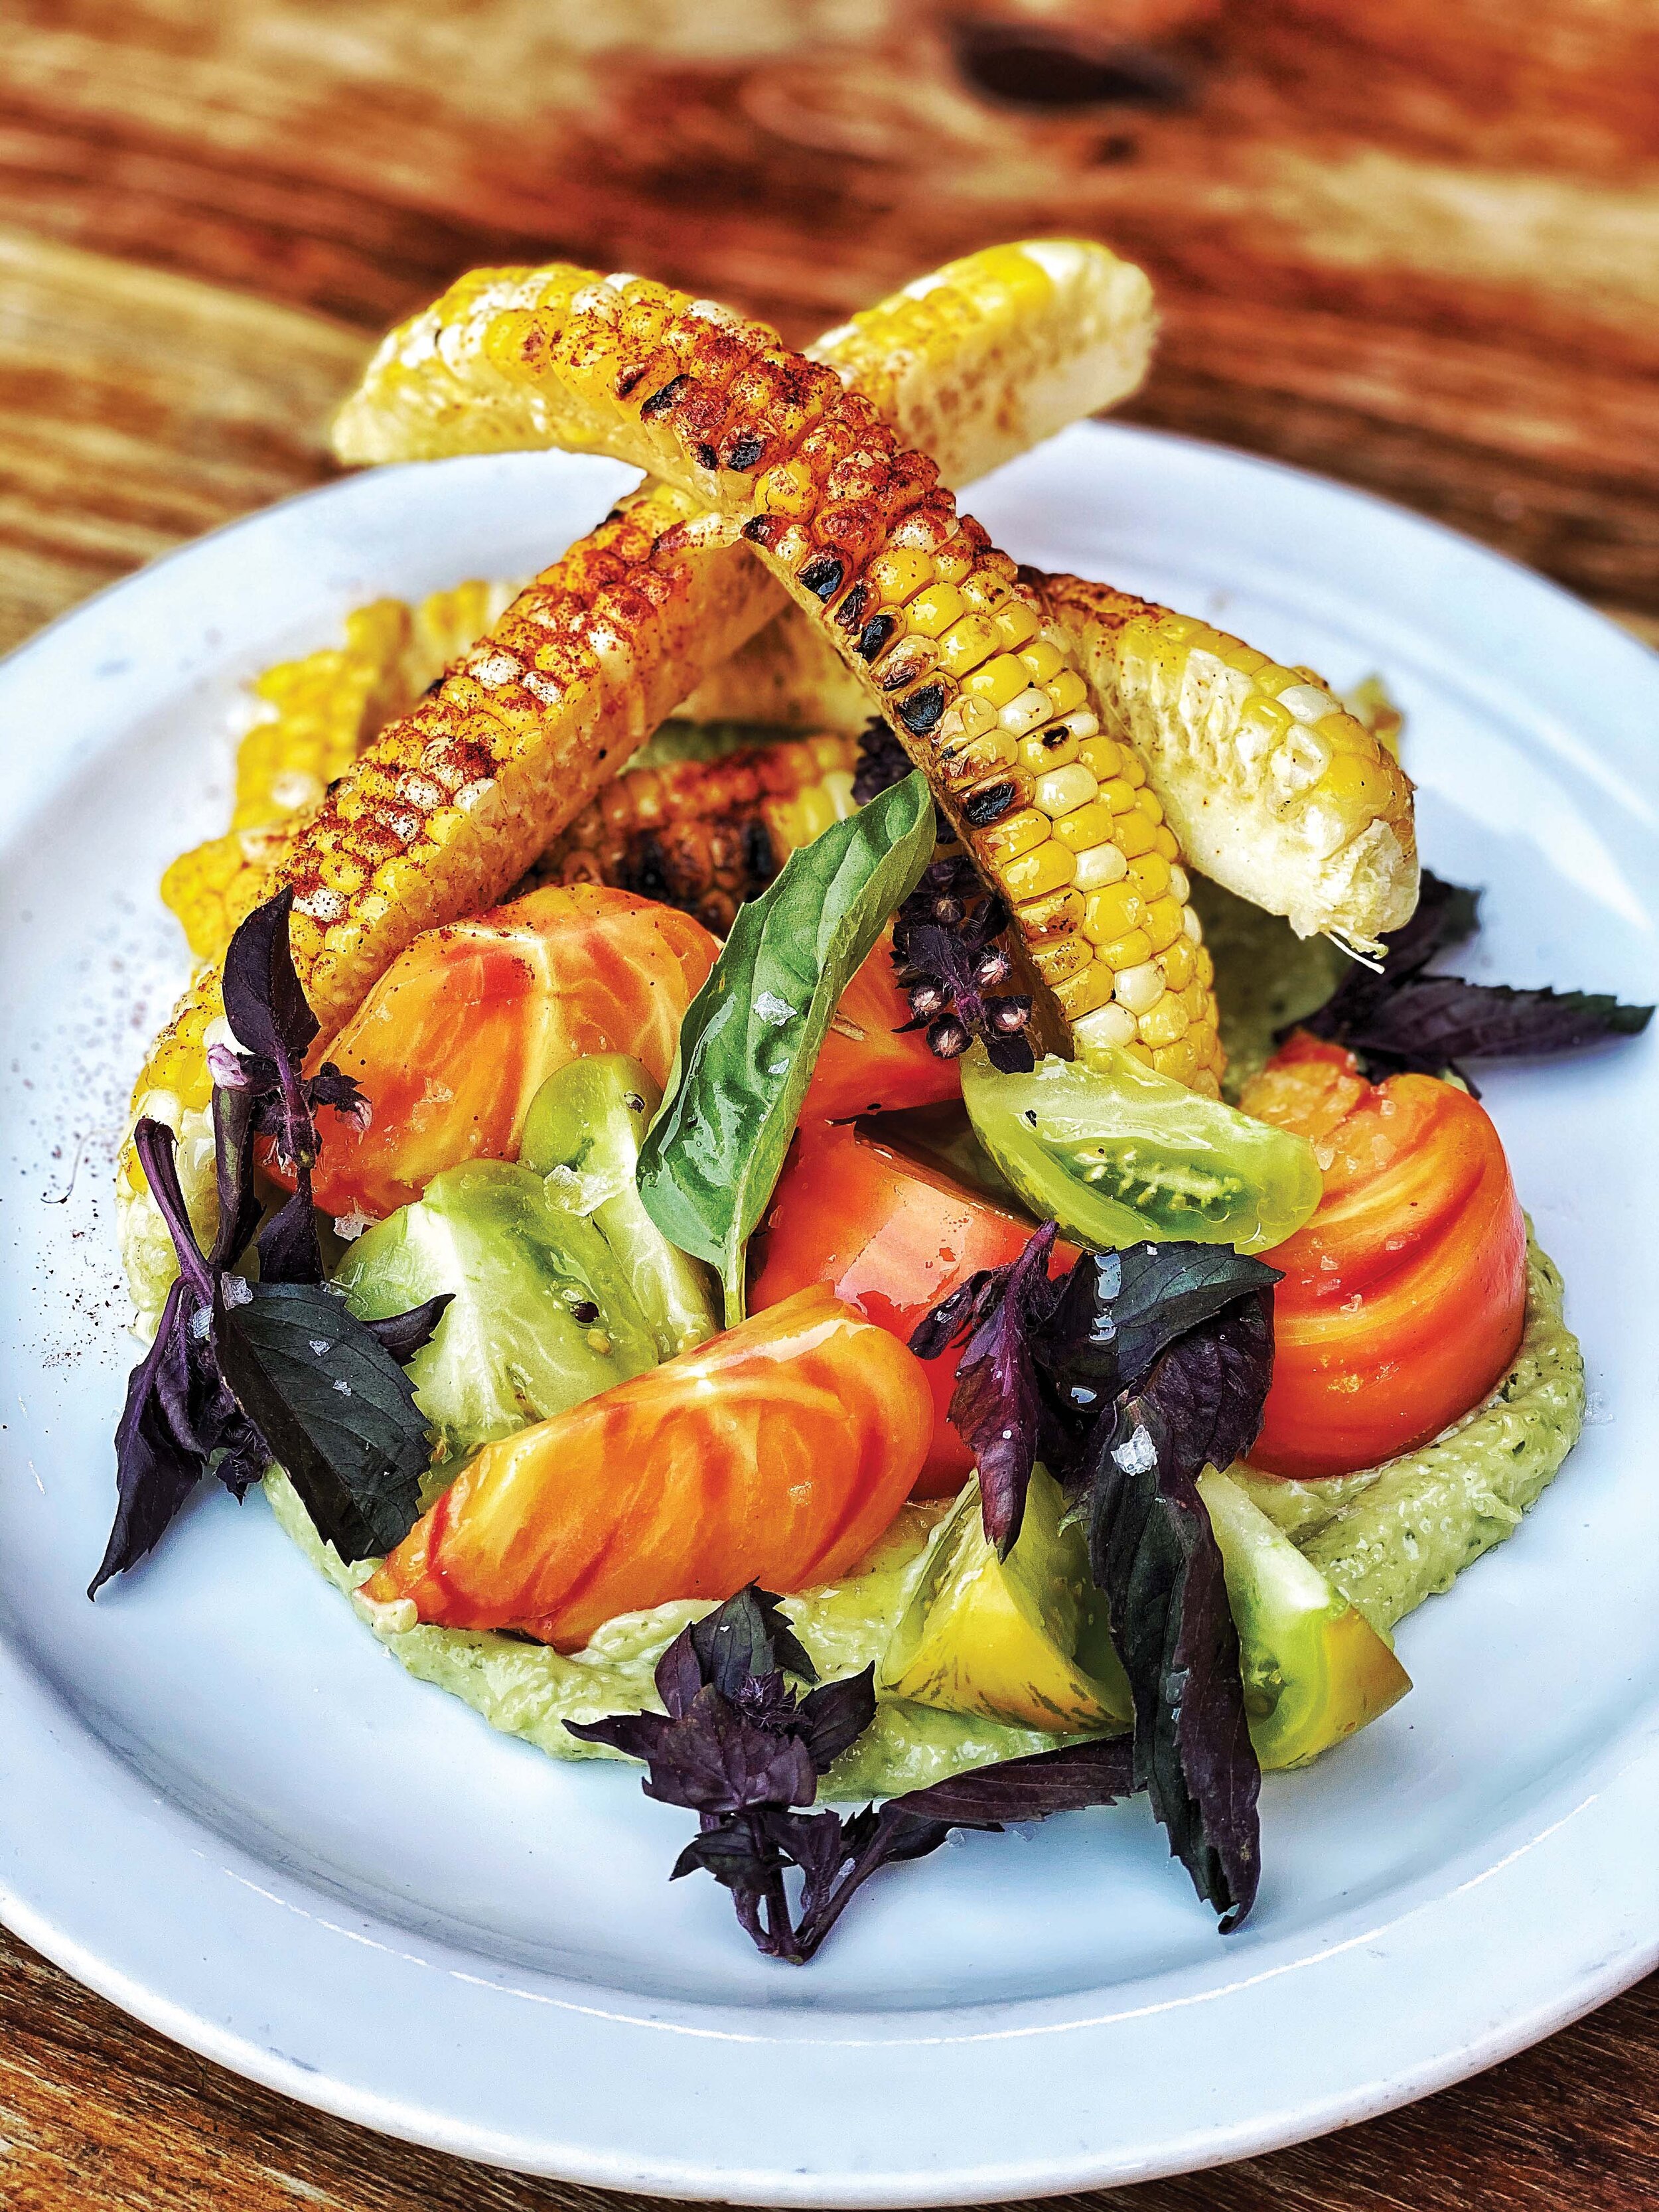  Staub's salad of grilled corn ribs and heirloom tomatoes, featuring Elder Flat Farm purple basil 